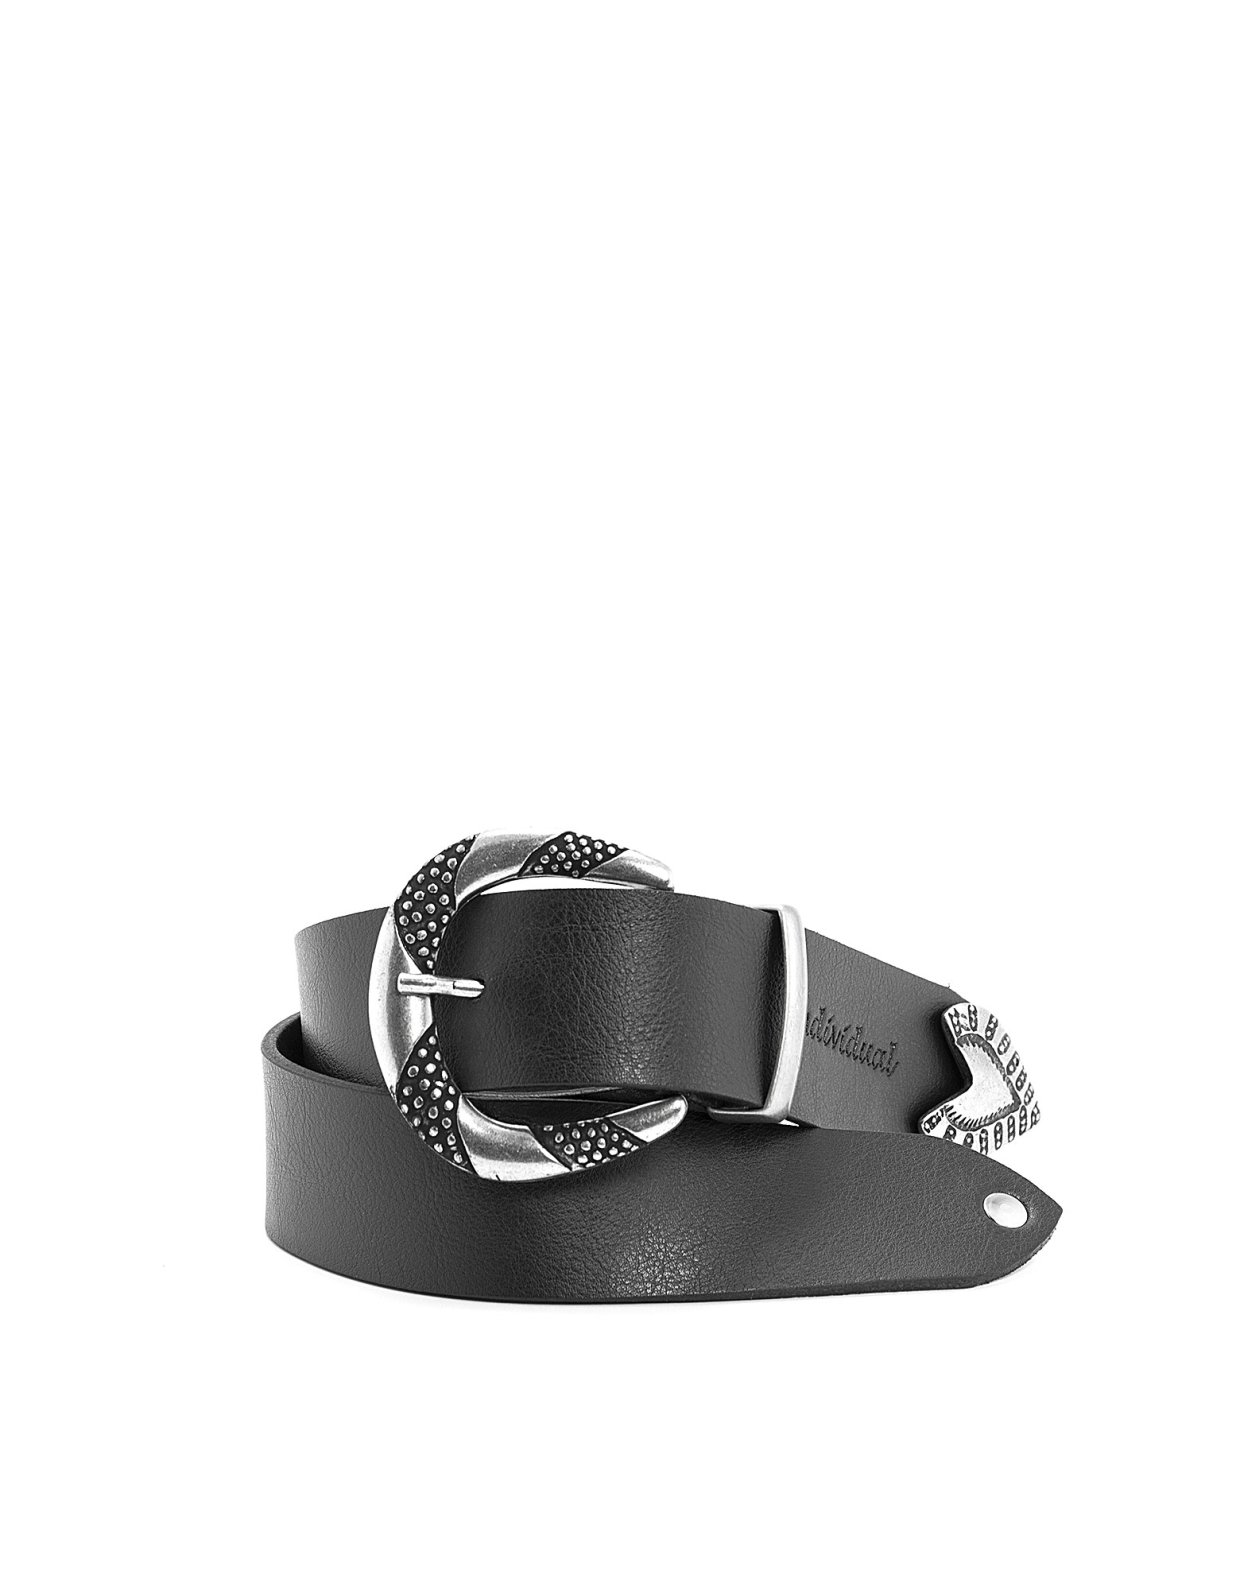 Individual Art Leather Loveshine belt black